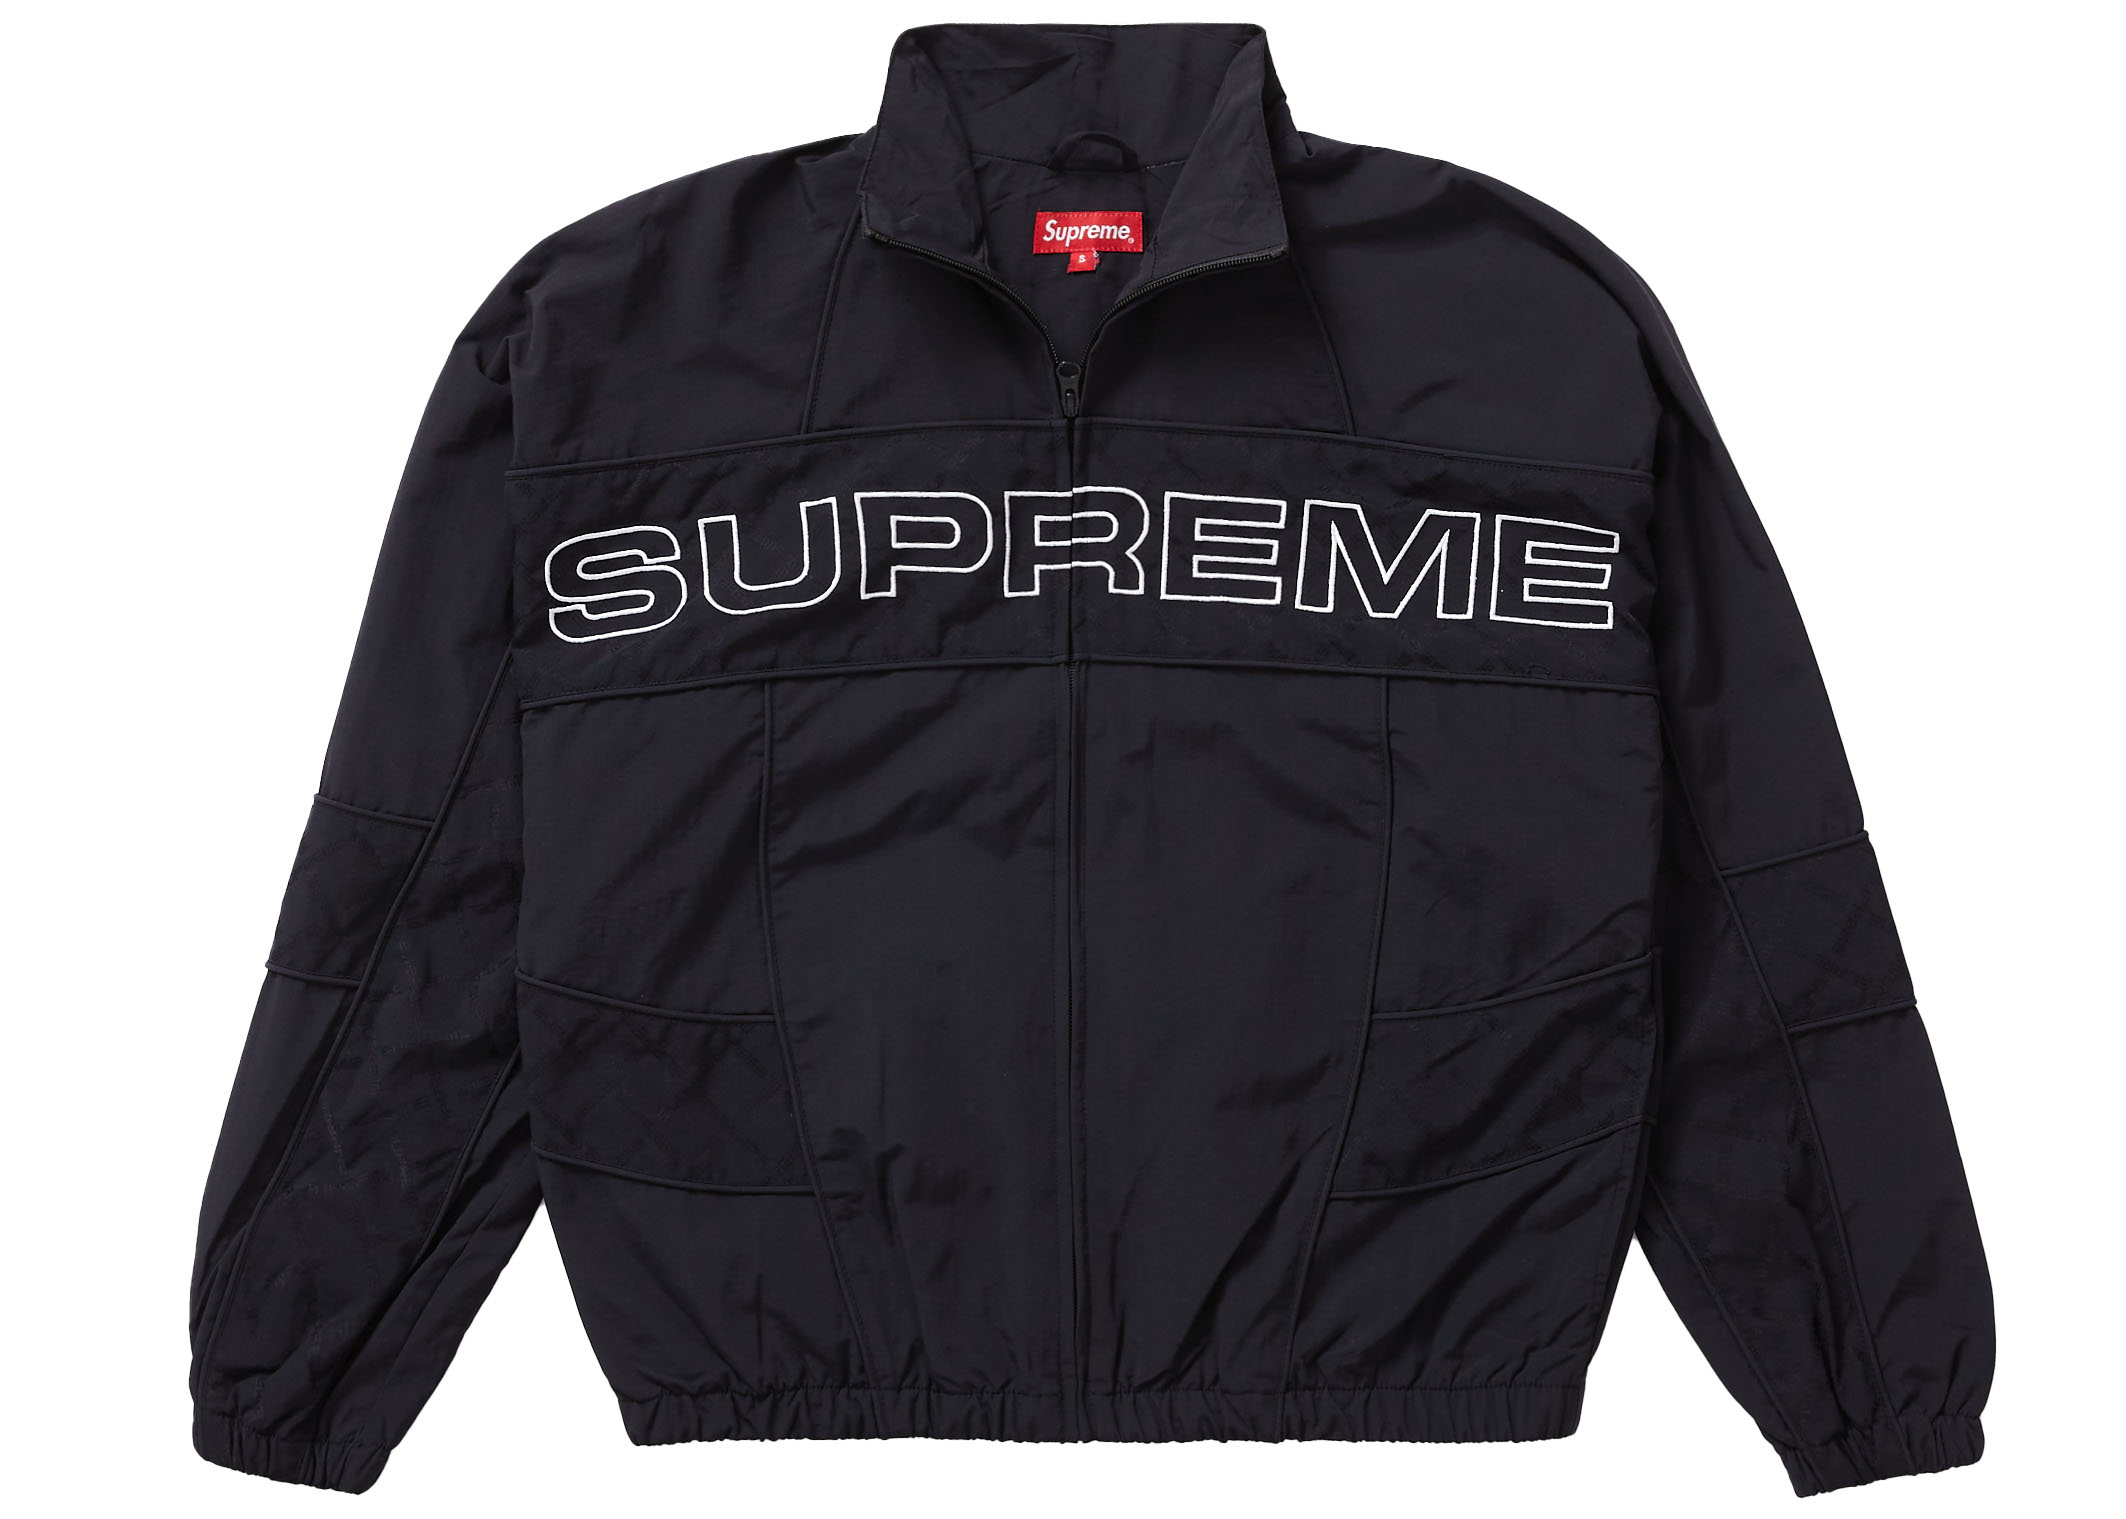 Supreme Jacquard Panel Track Jacket Black